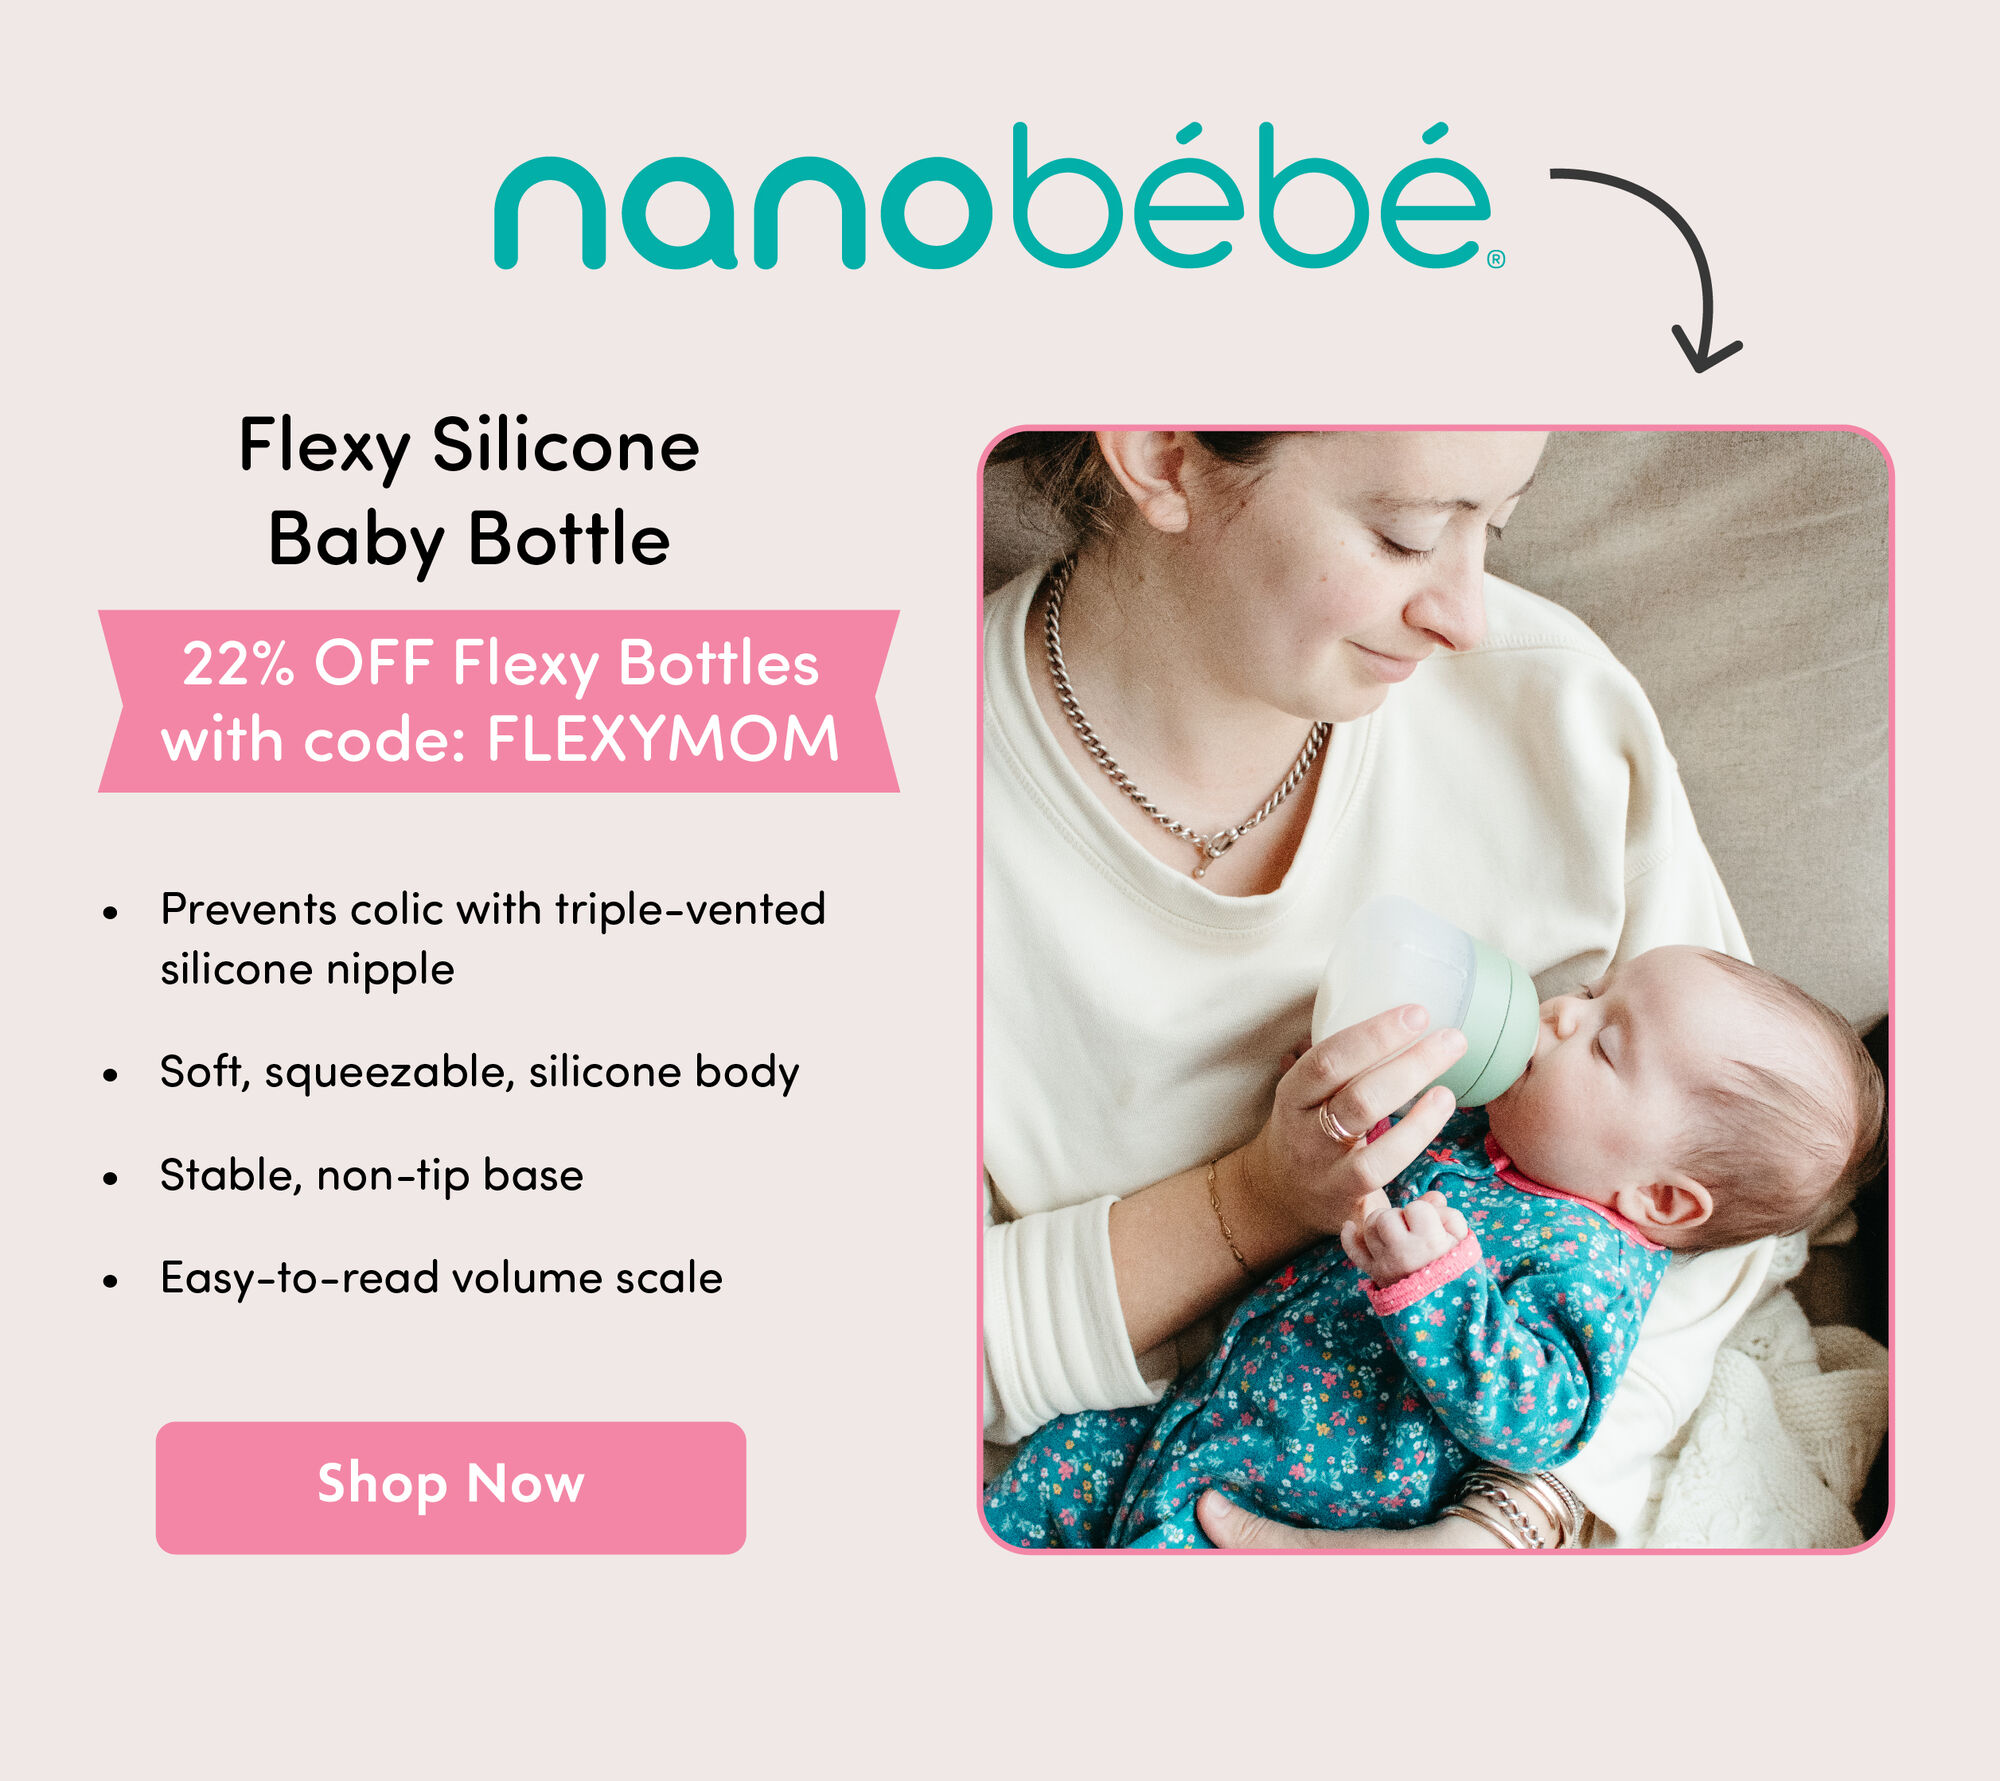 Flexy silicone baby bottle. 22% OF flexy bottles with code flexymom.